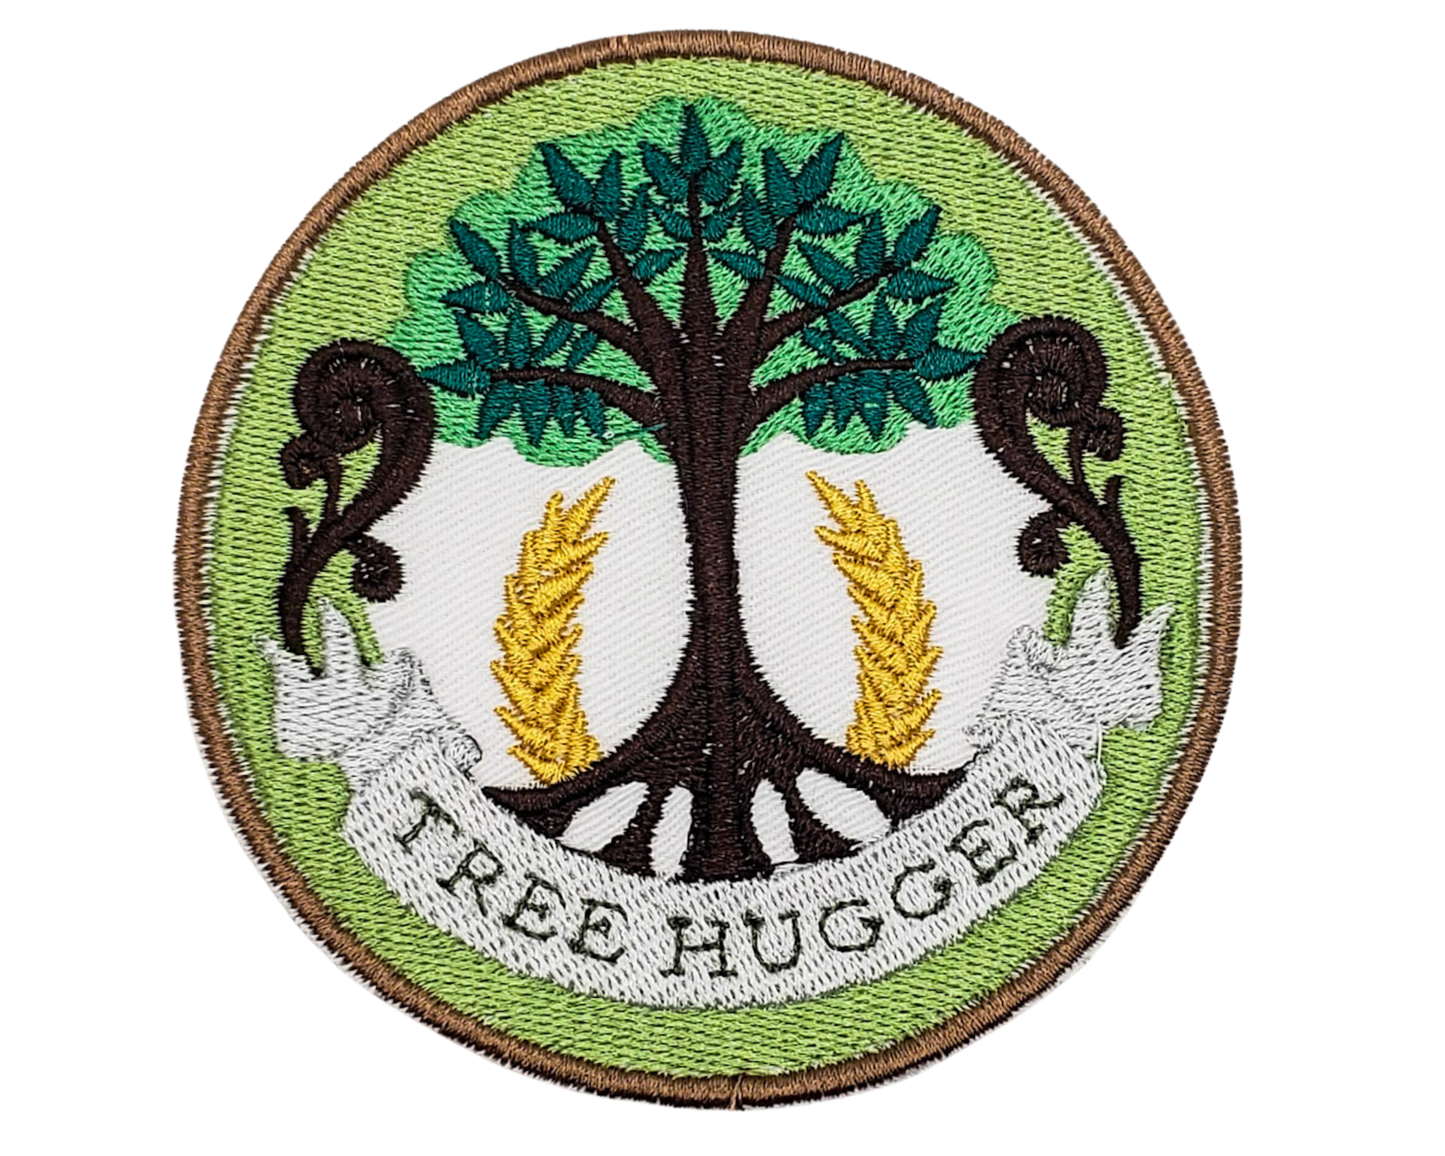 Tree Hugger Patch